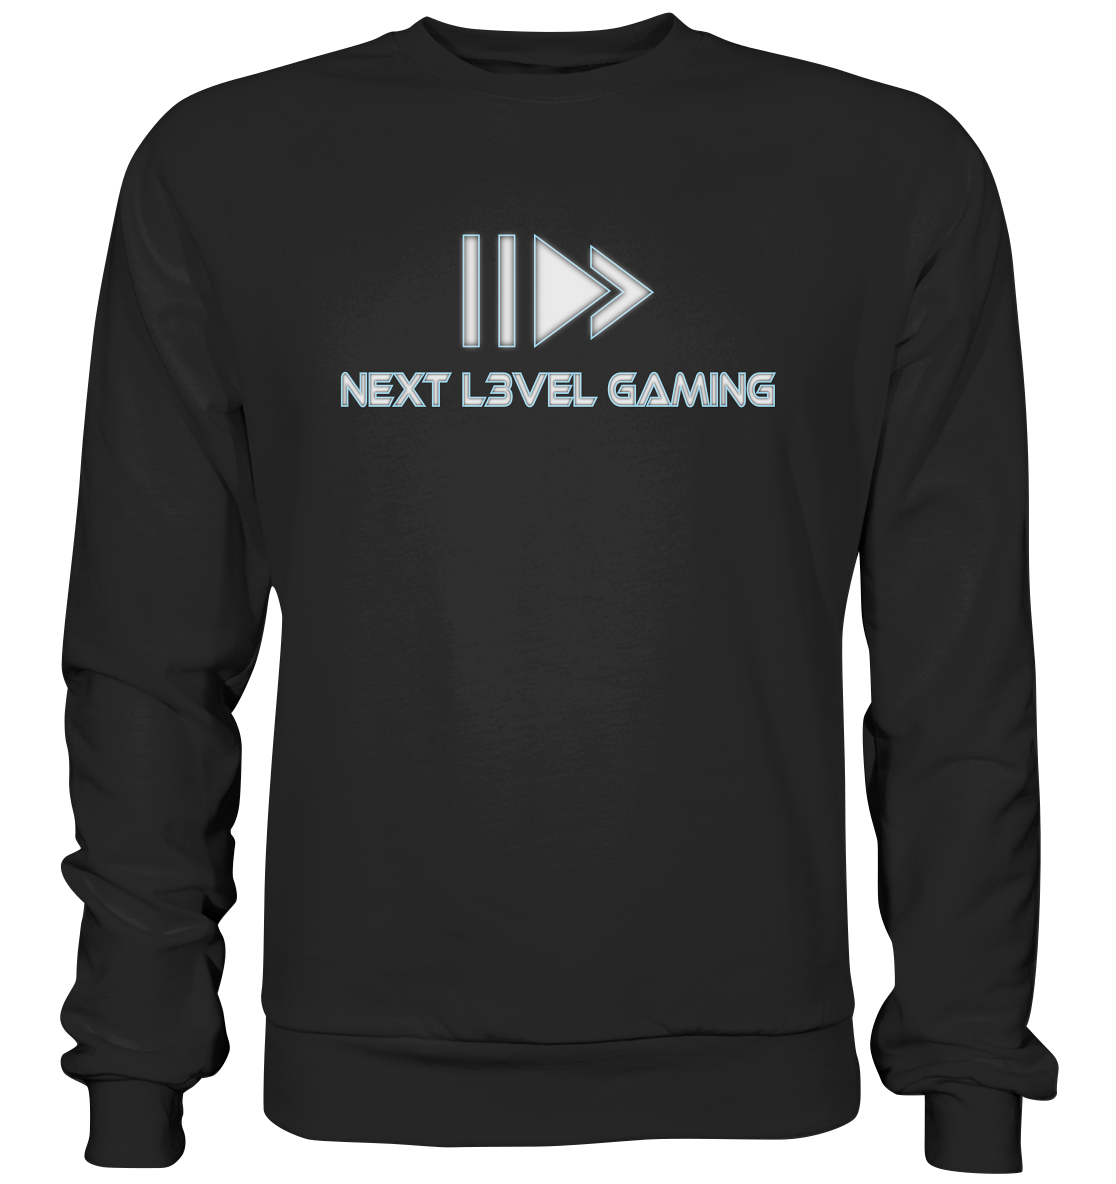 NEXT L3VEL GAMING - Basic Sweatshirt